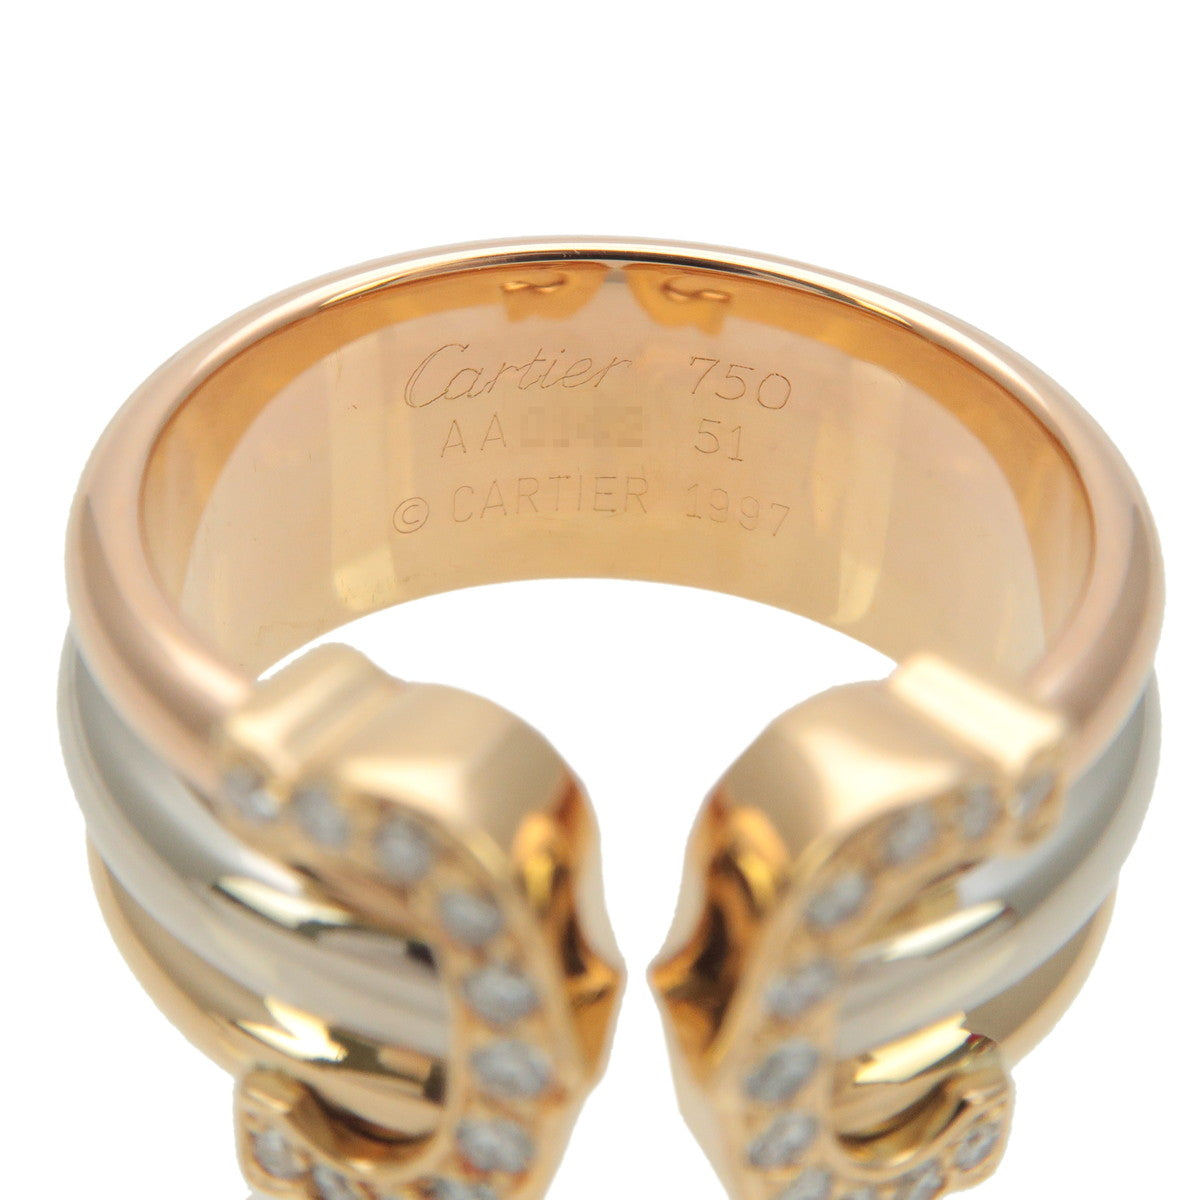 Cartier 2C Diamond Ring LM Three Color 18K YG/WG/PG #51 US5.5-6